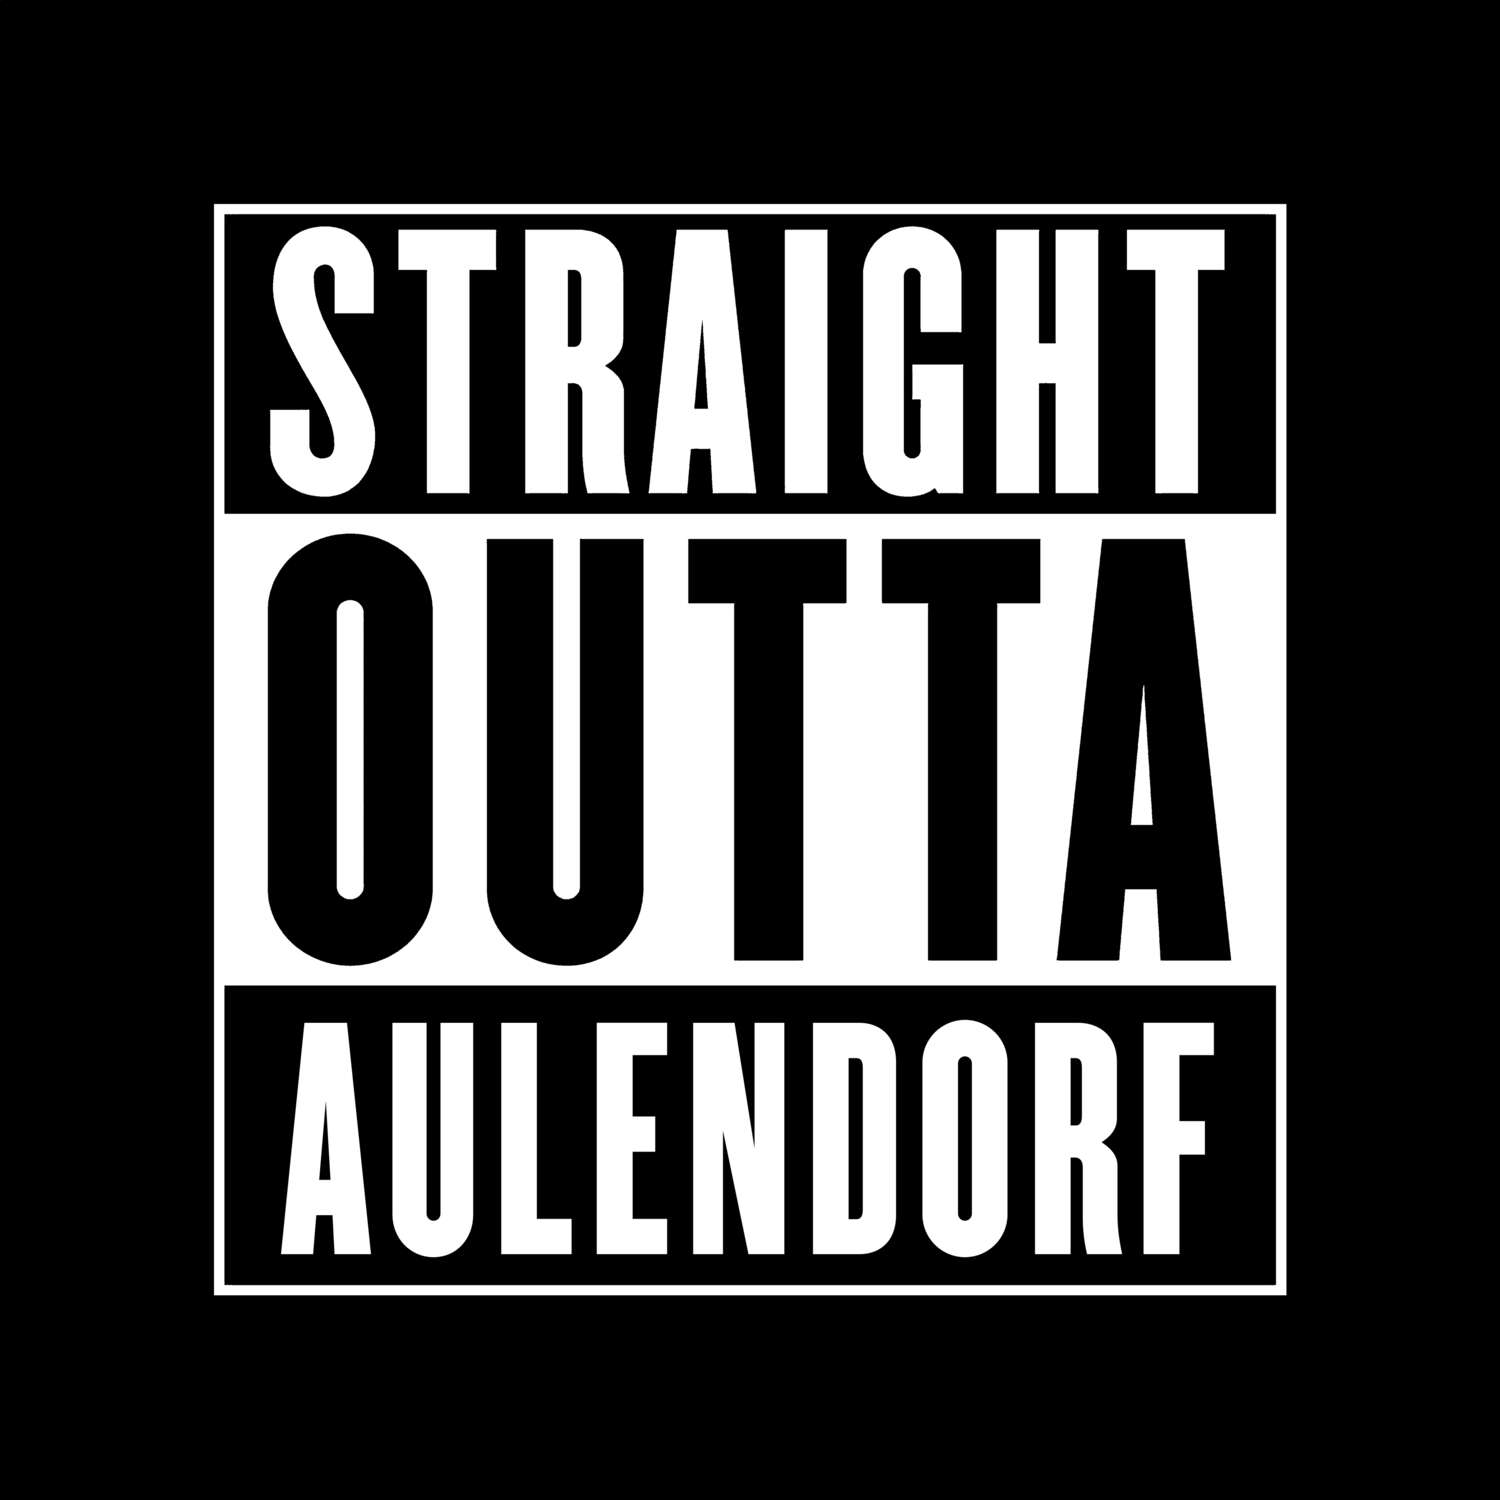 Aulendorf T-Shirt »Straight Outta«